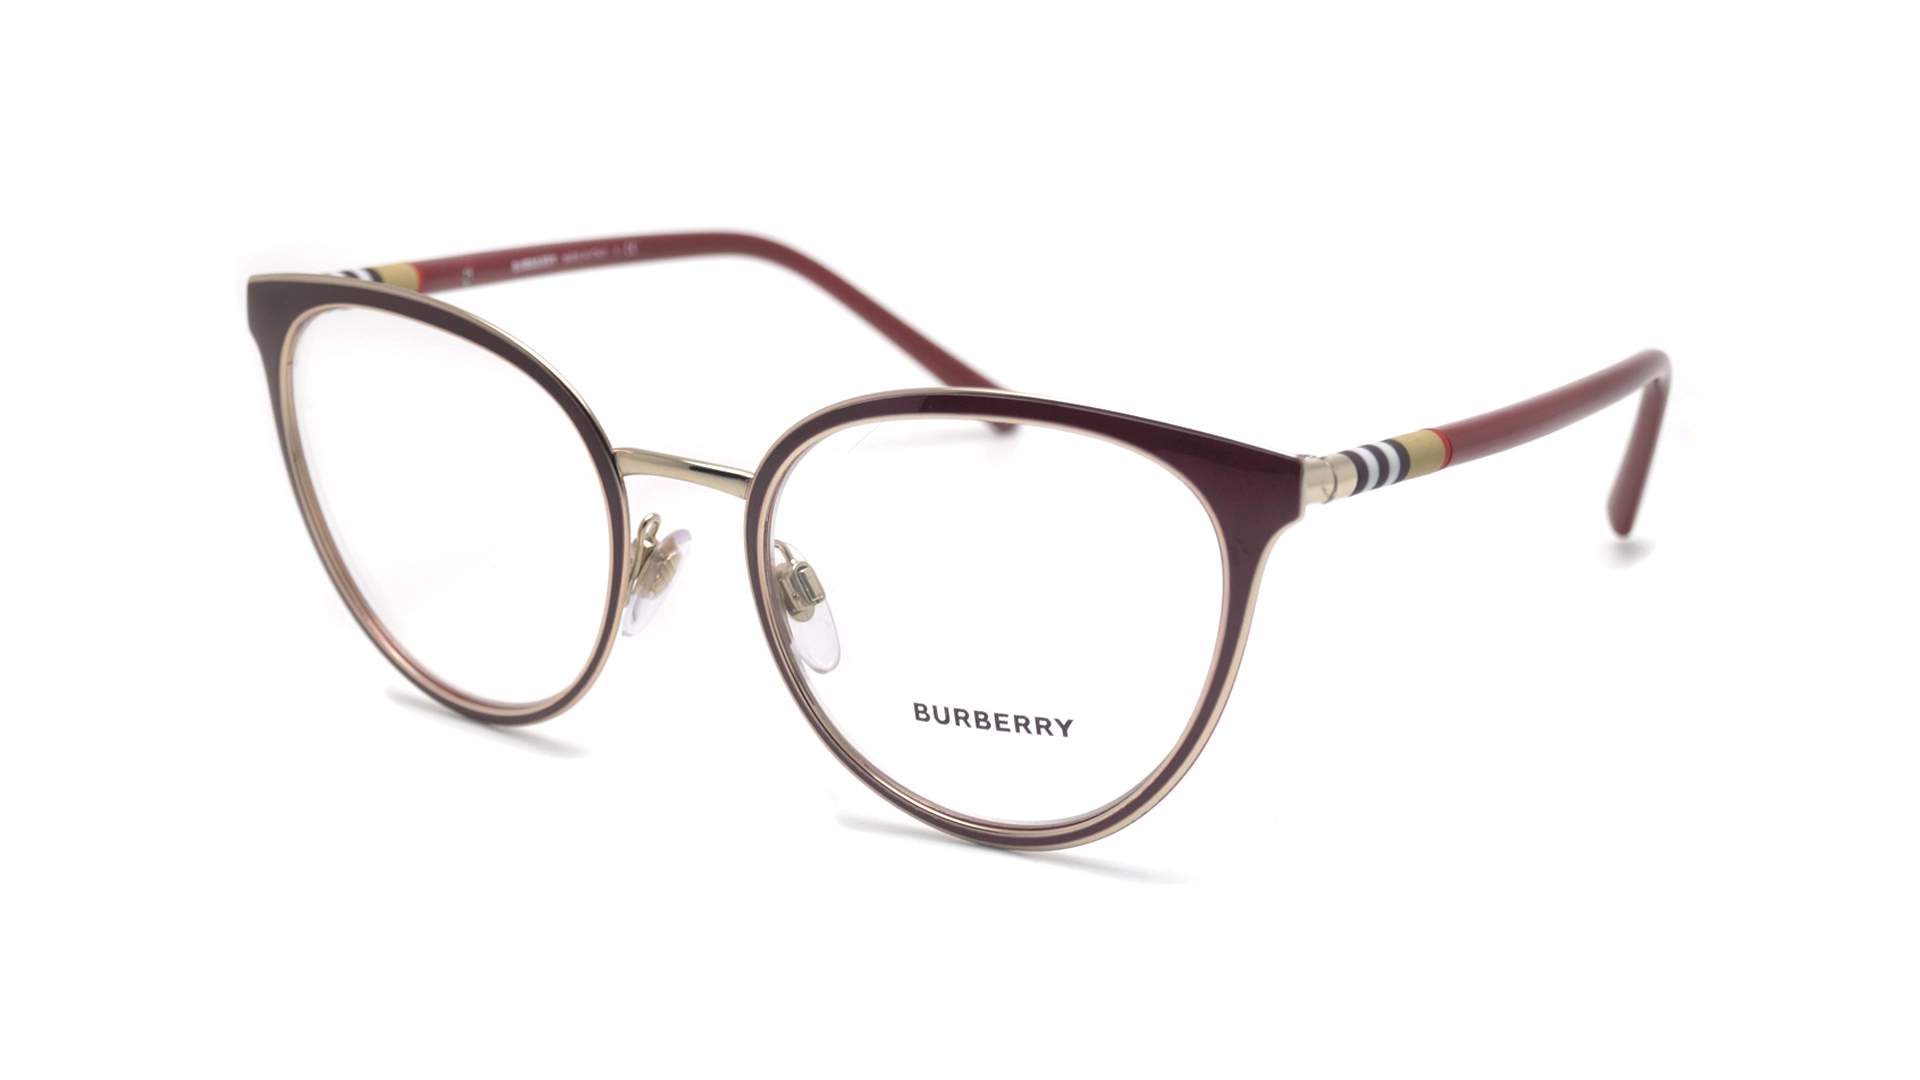 burberry glasses purple